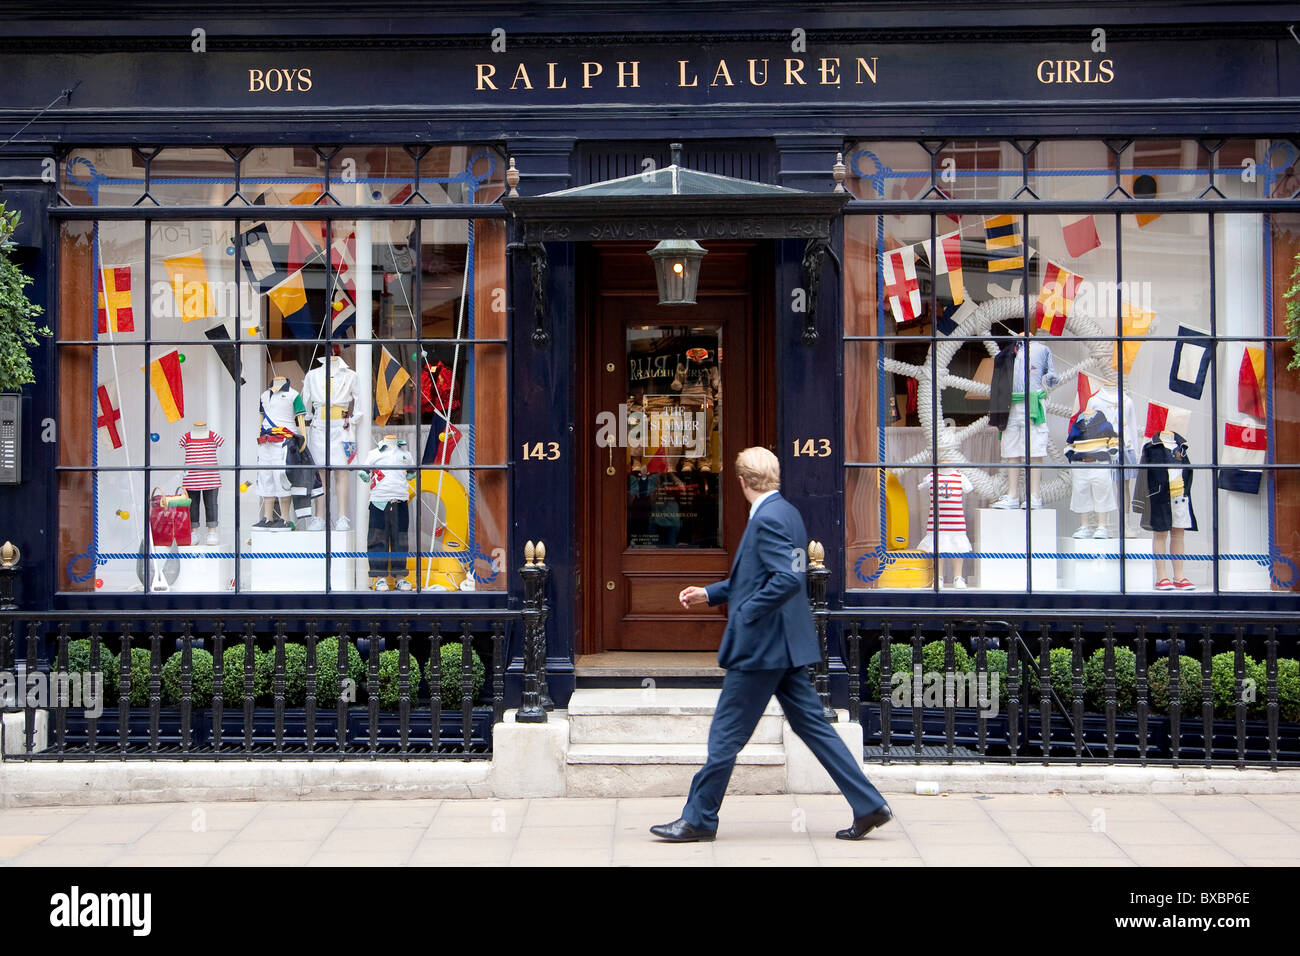 Ralph lauren store in fashion fotografías e imágenes de alta resolución -  Alamy